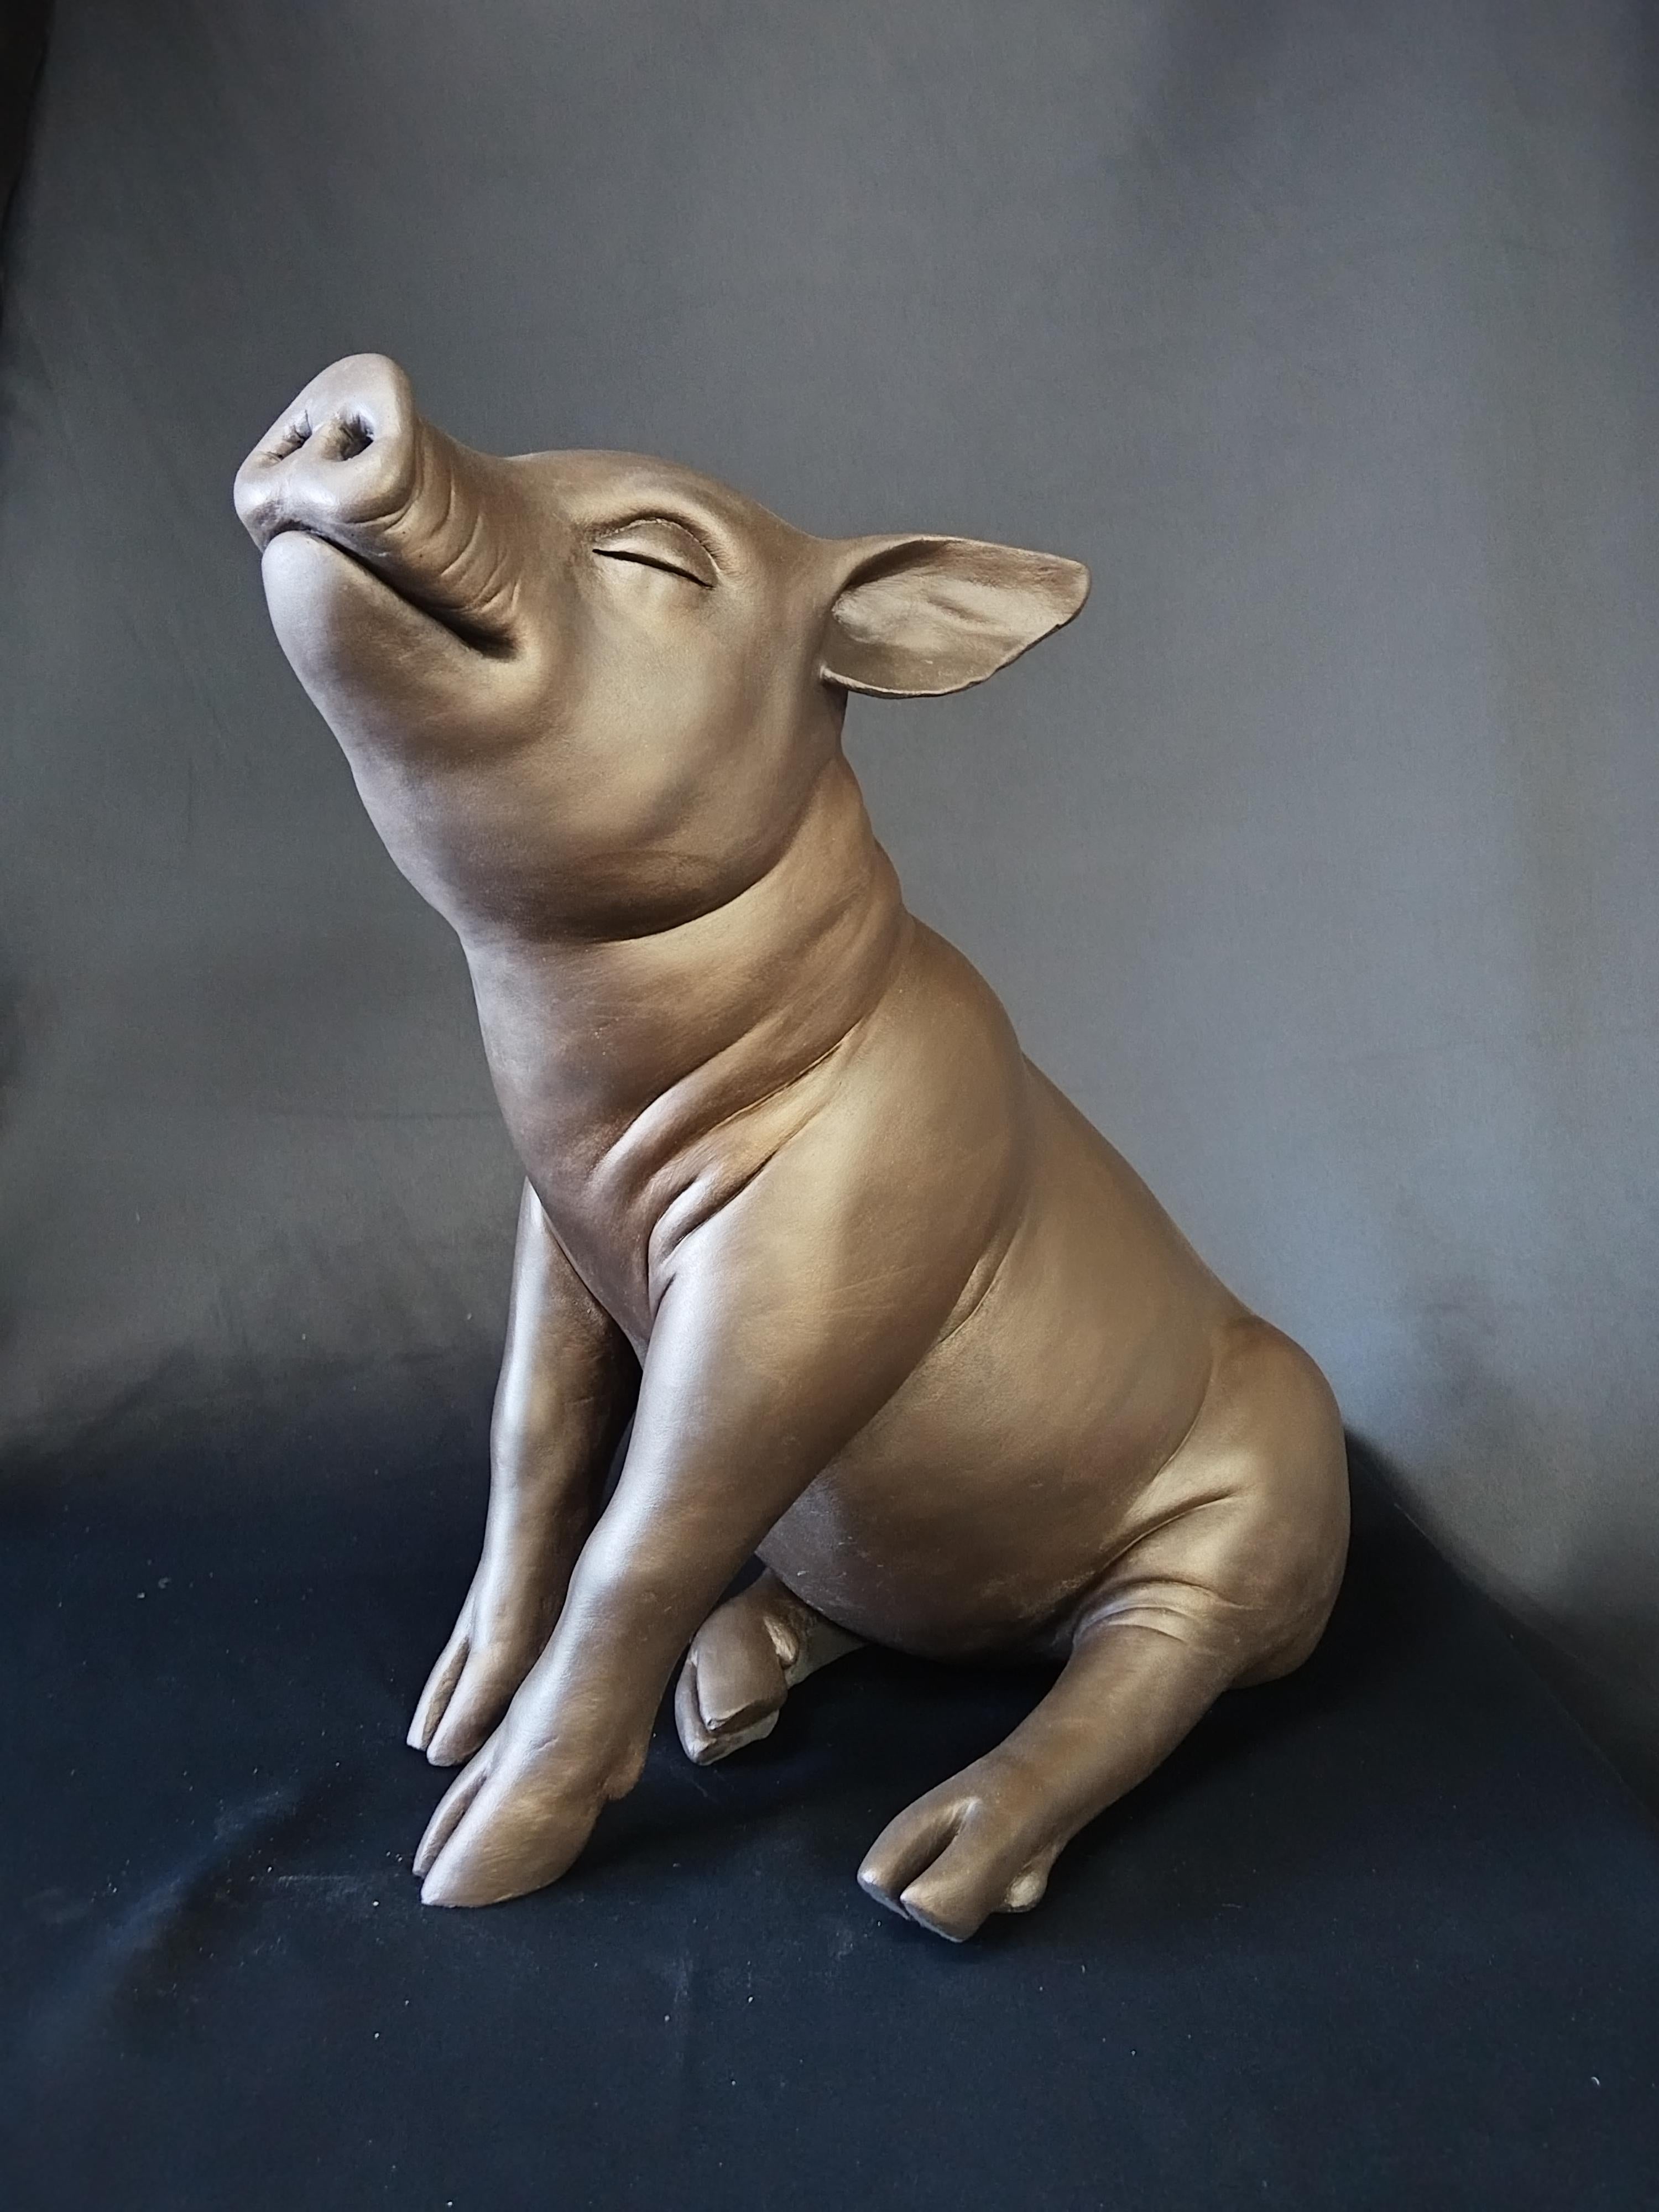 Melani Louwrens Figurative Sculpture - Life Size Limited Edition Bronze Sculpture "Piglet"